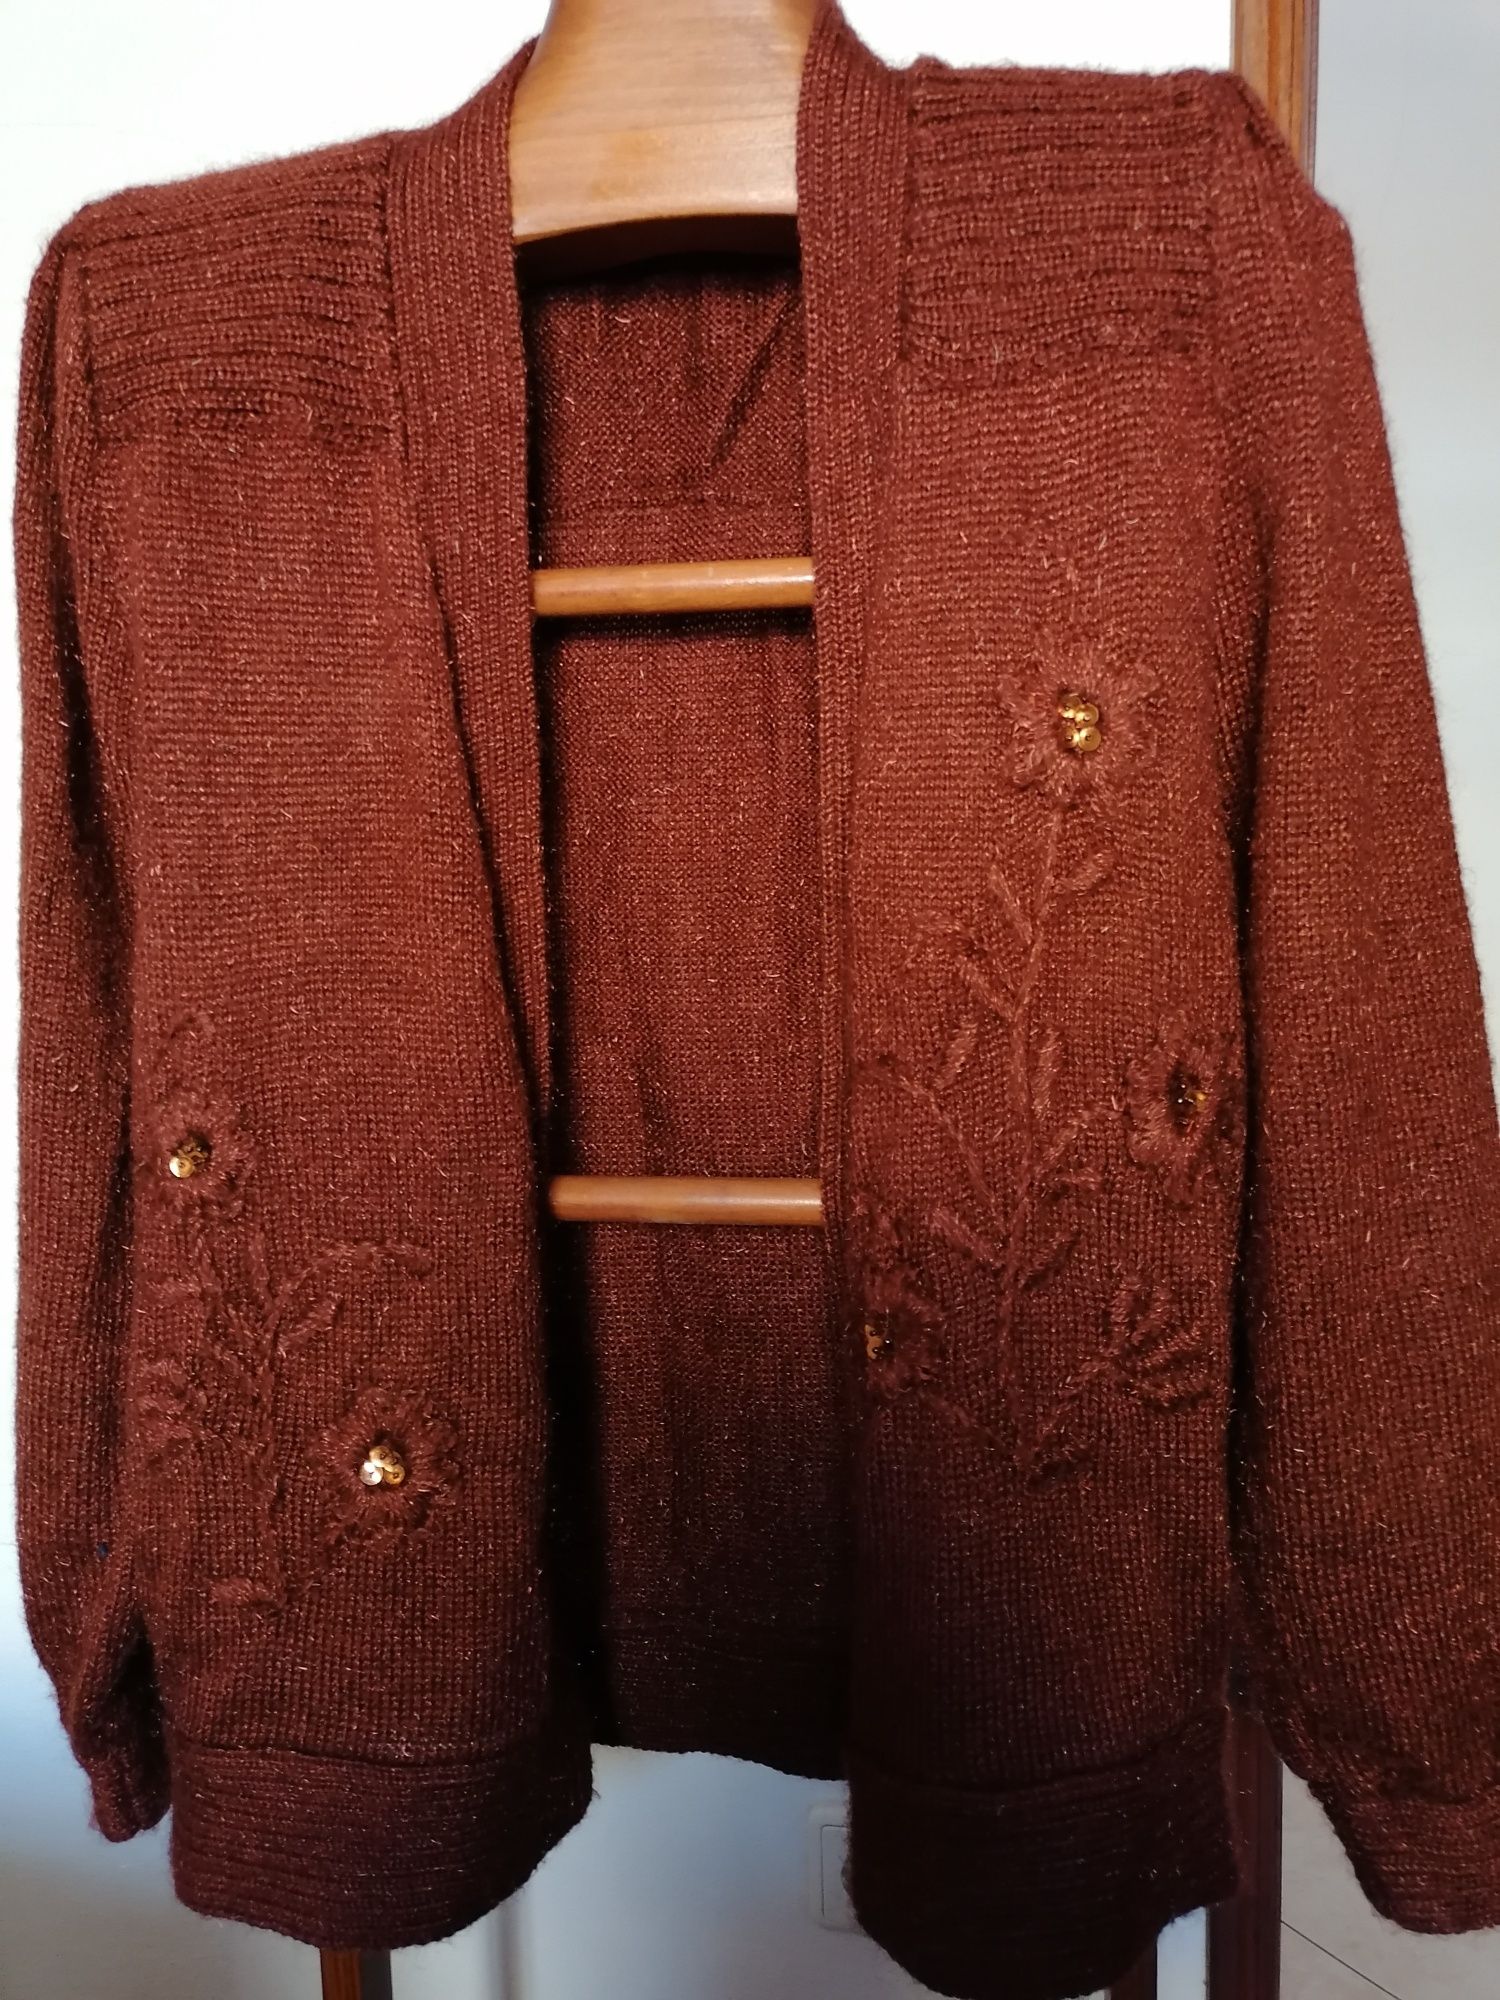 Casaco de malha portuguesa, vintage, tamanho L, bordeaux